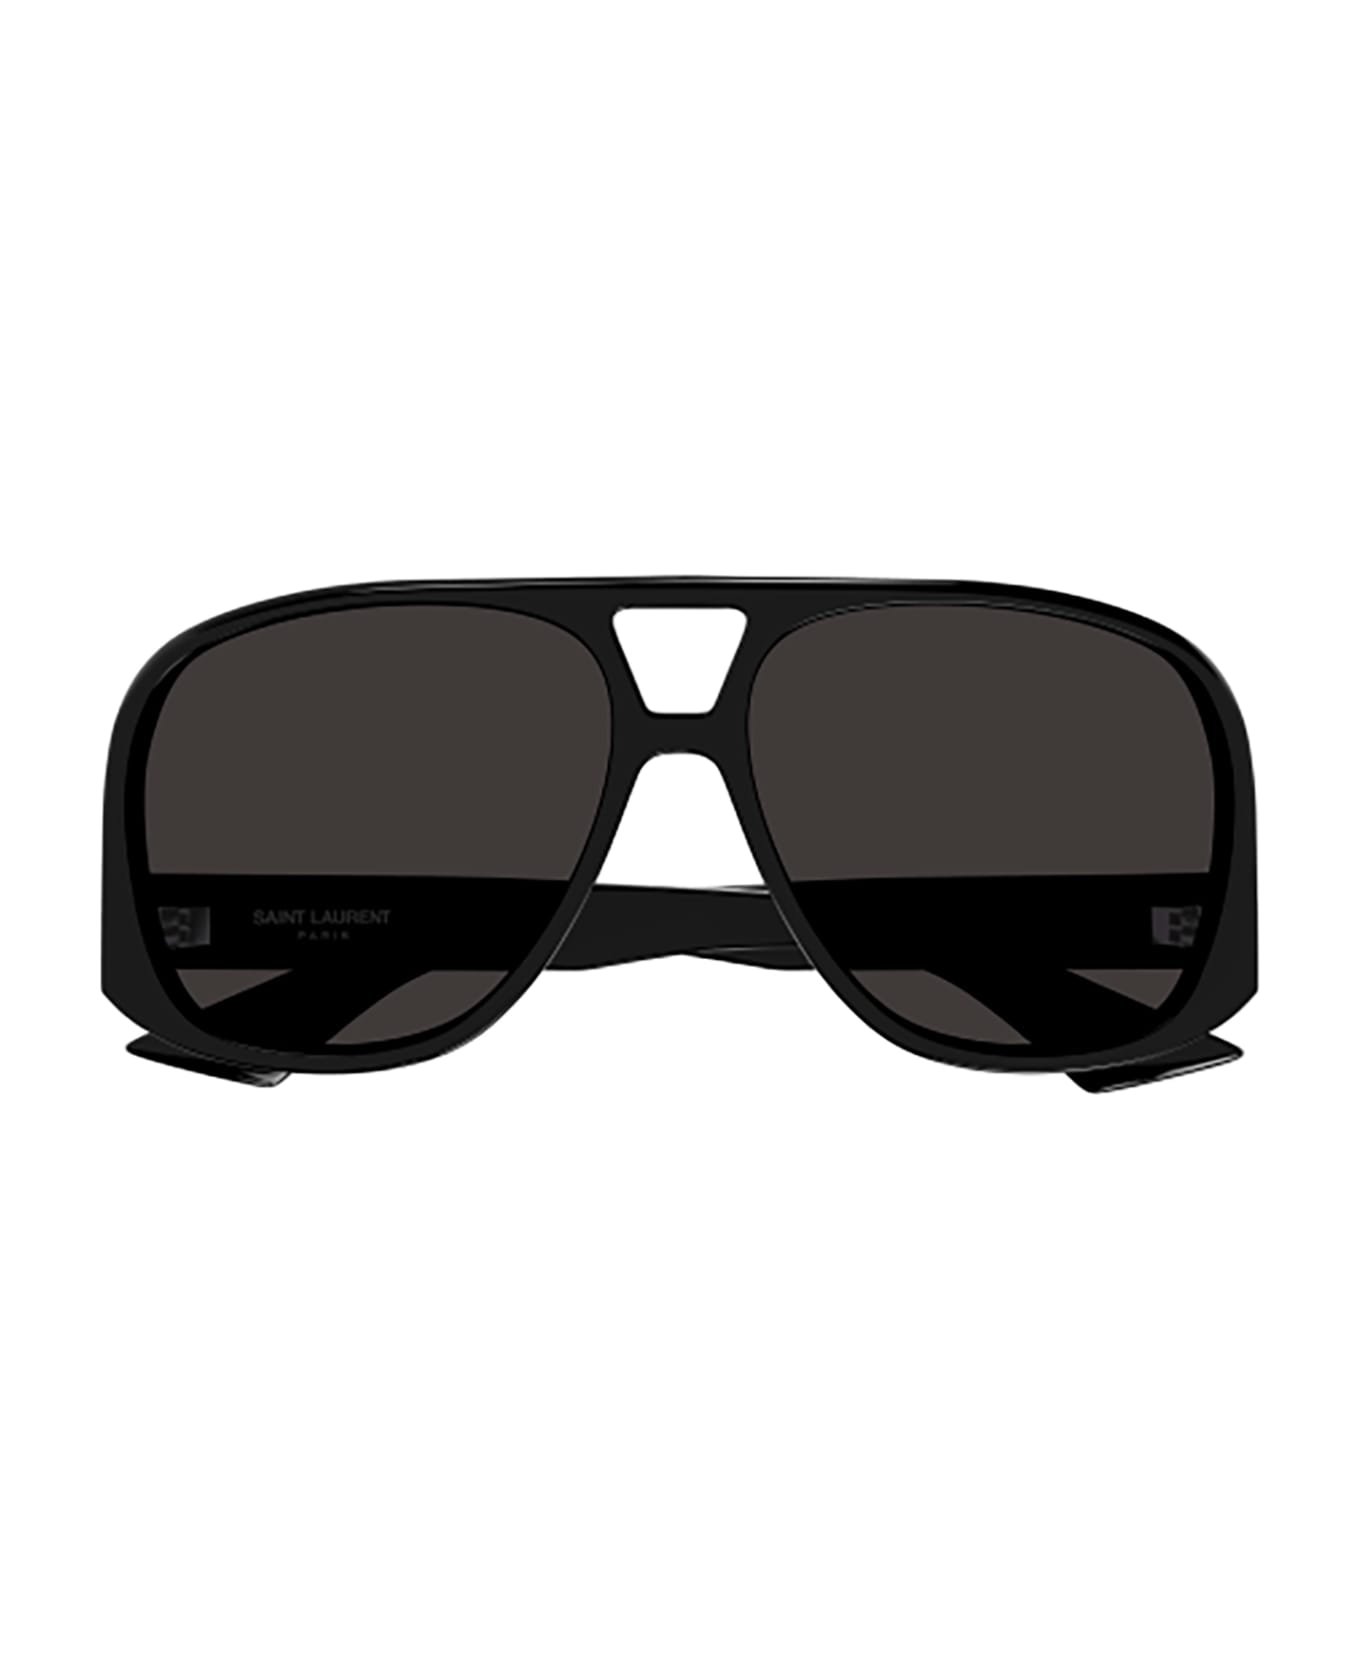 Saint Laurent Eyewear Sl 652 Solace Sunglasses - 001 Cazal Eyewear 968 Gold Sunglasses